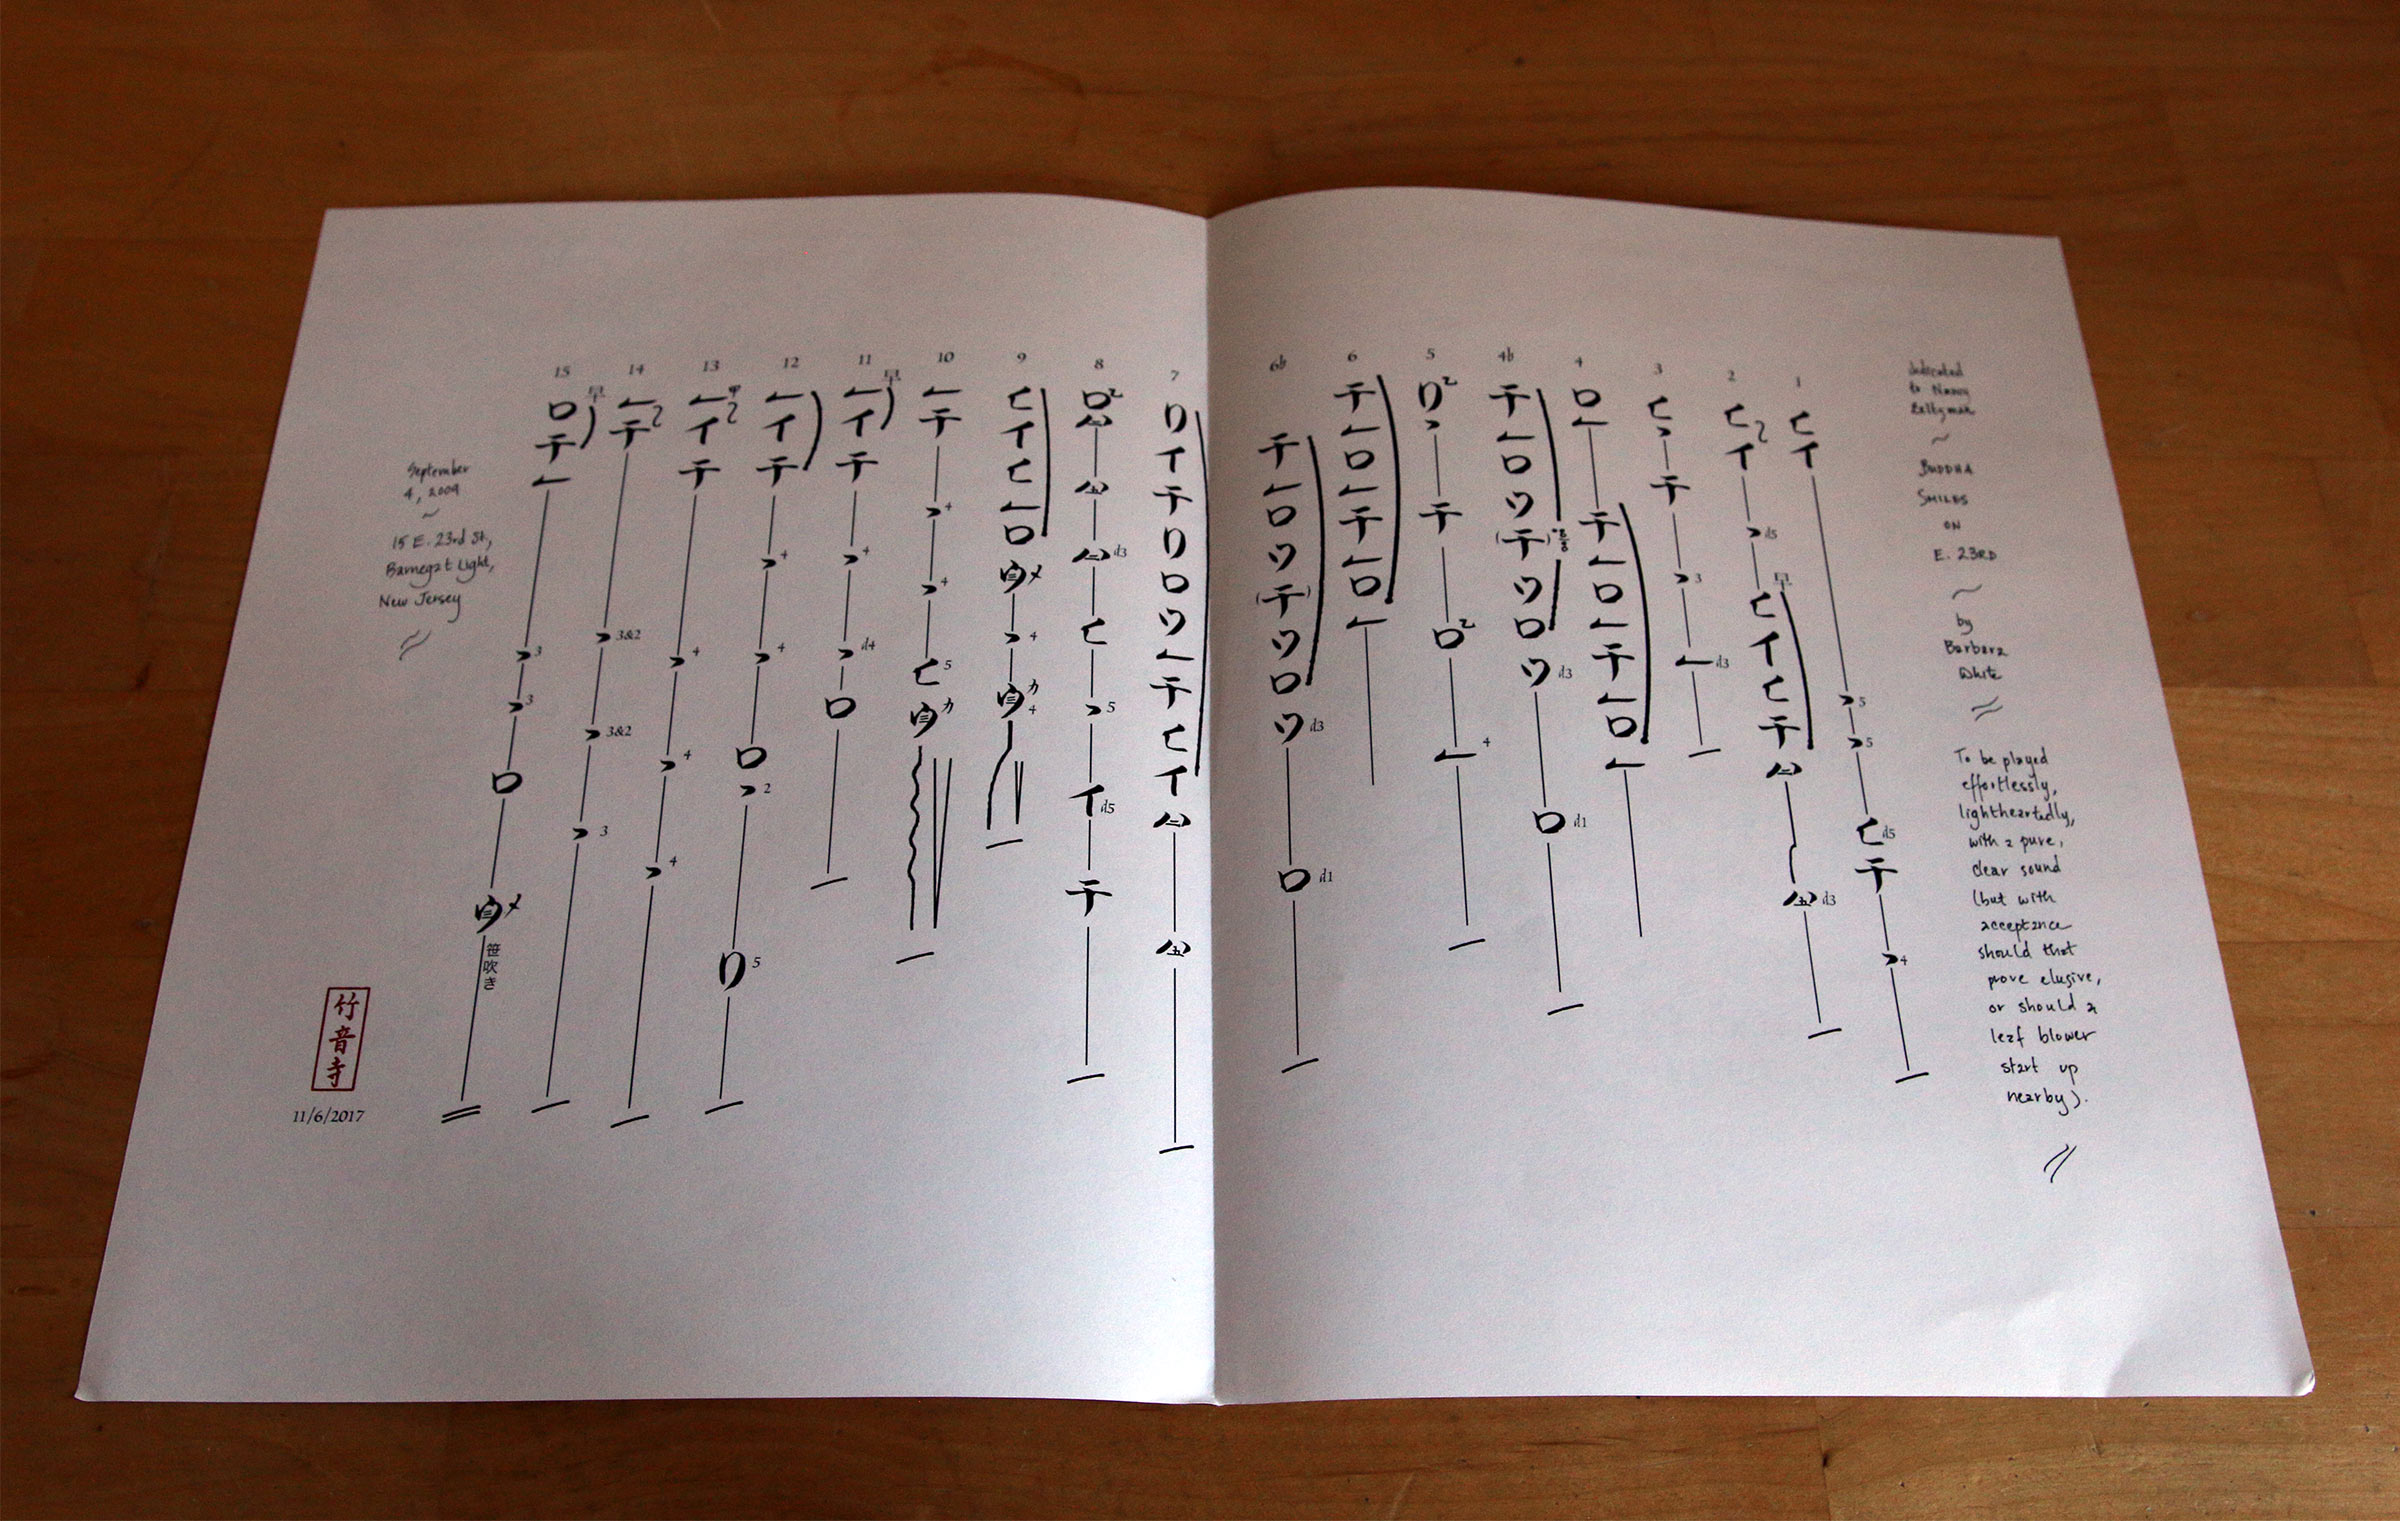 Traditional Japanese shakuhachi musical notation.